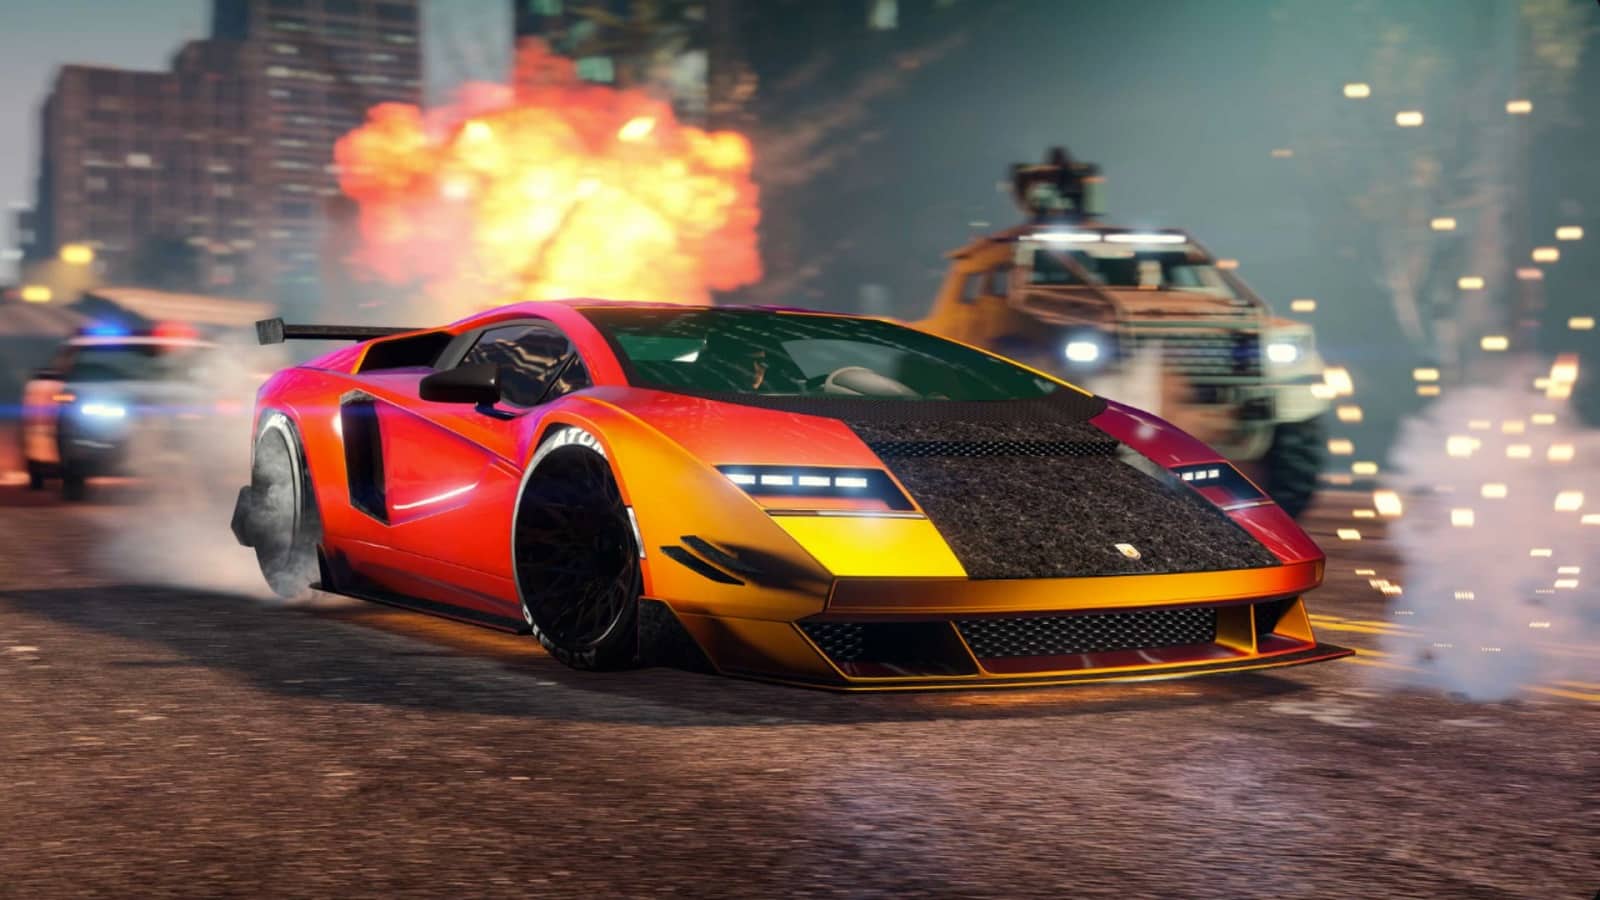 Rockstar raises the bar with cutting-edge engine in GTA VI